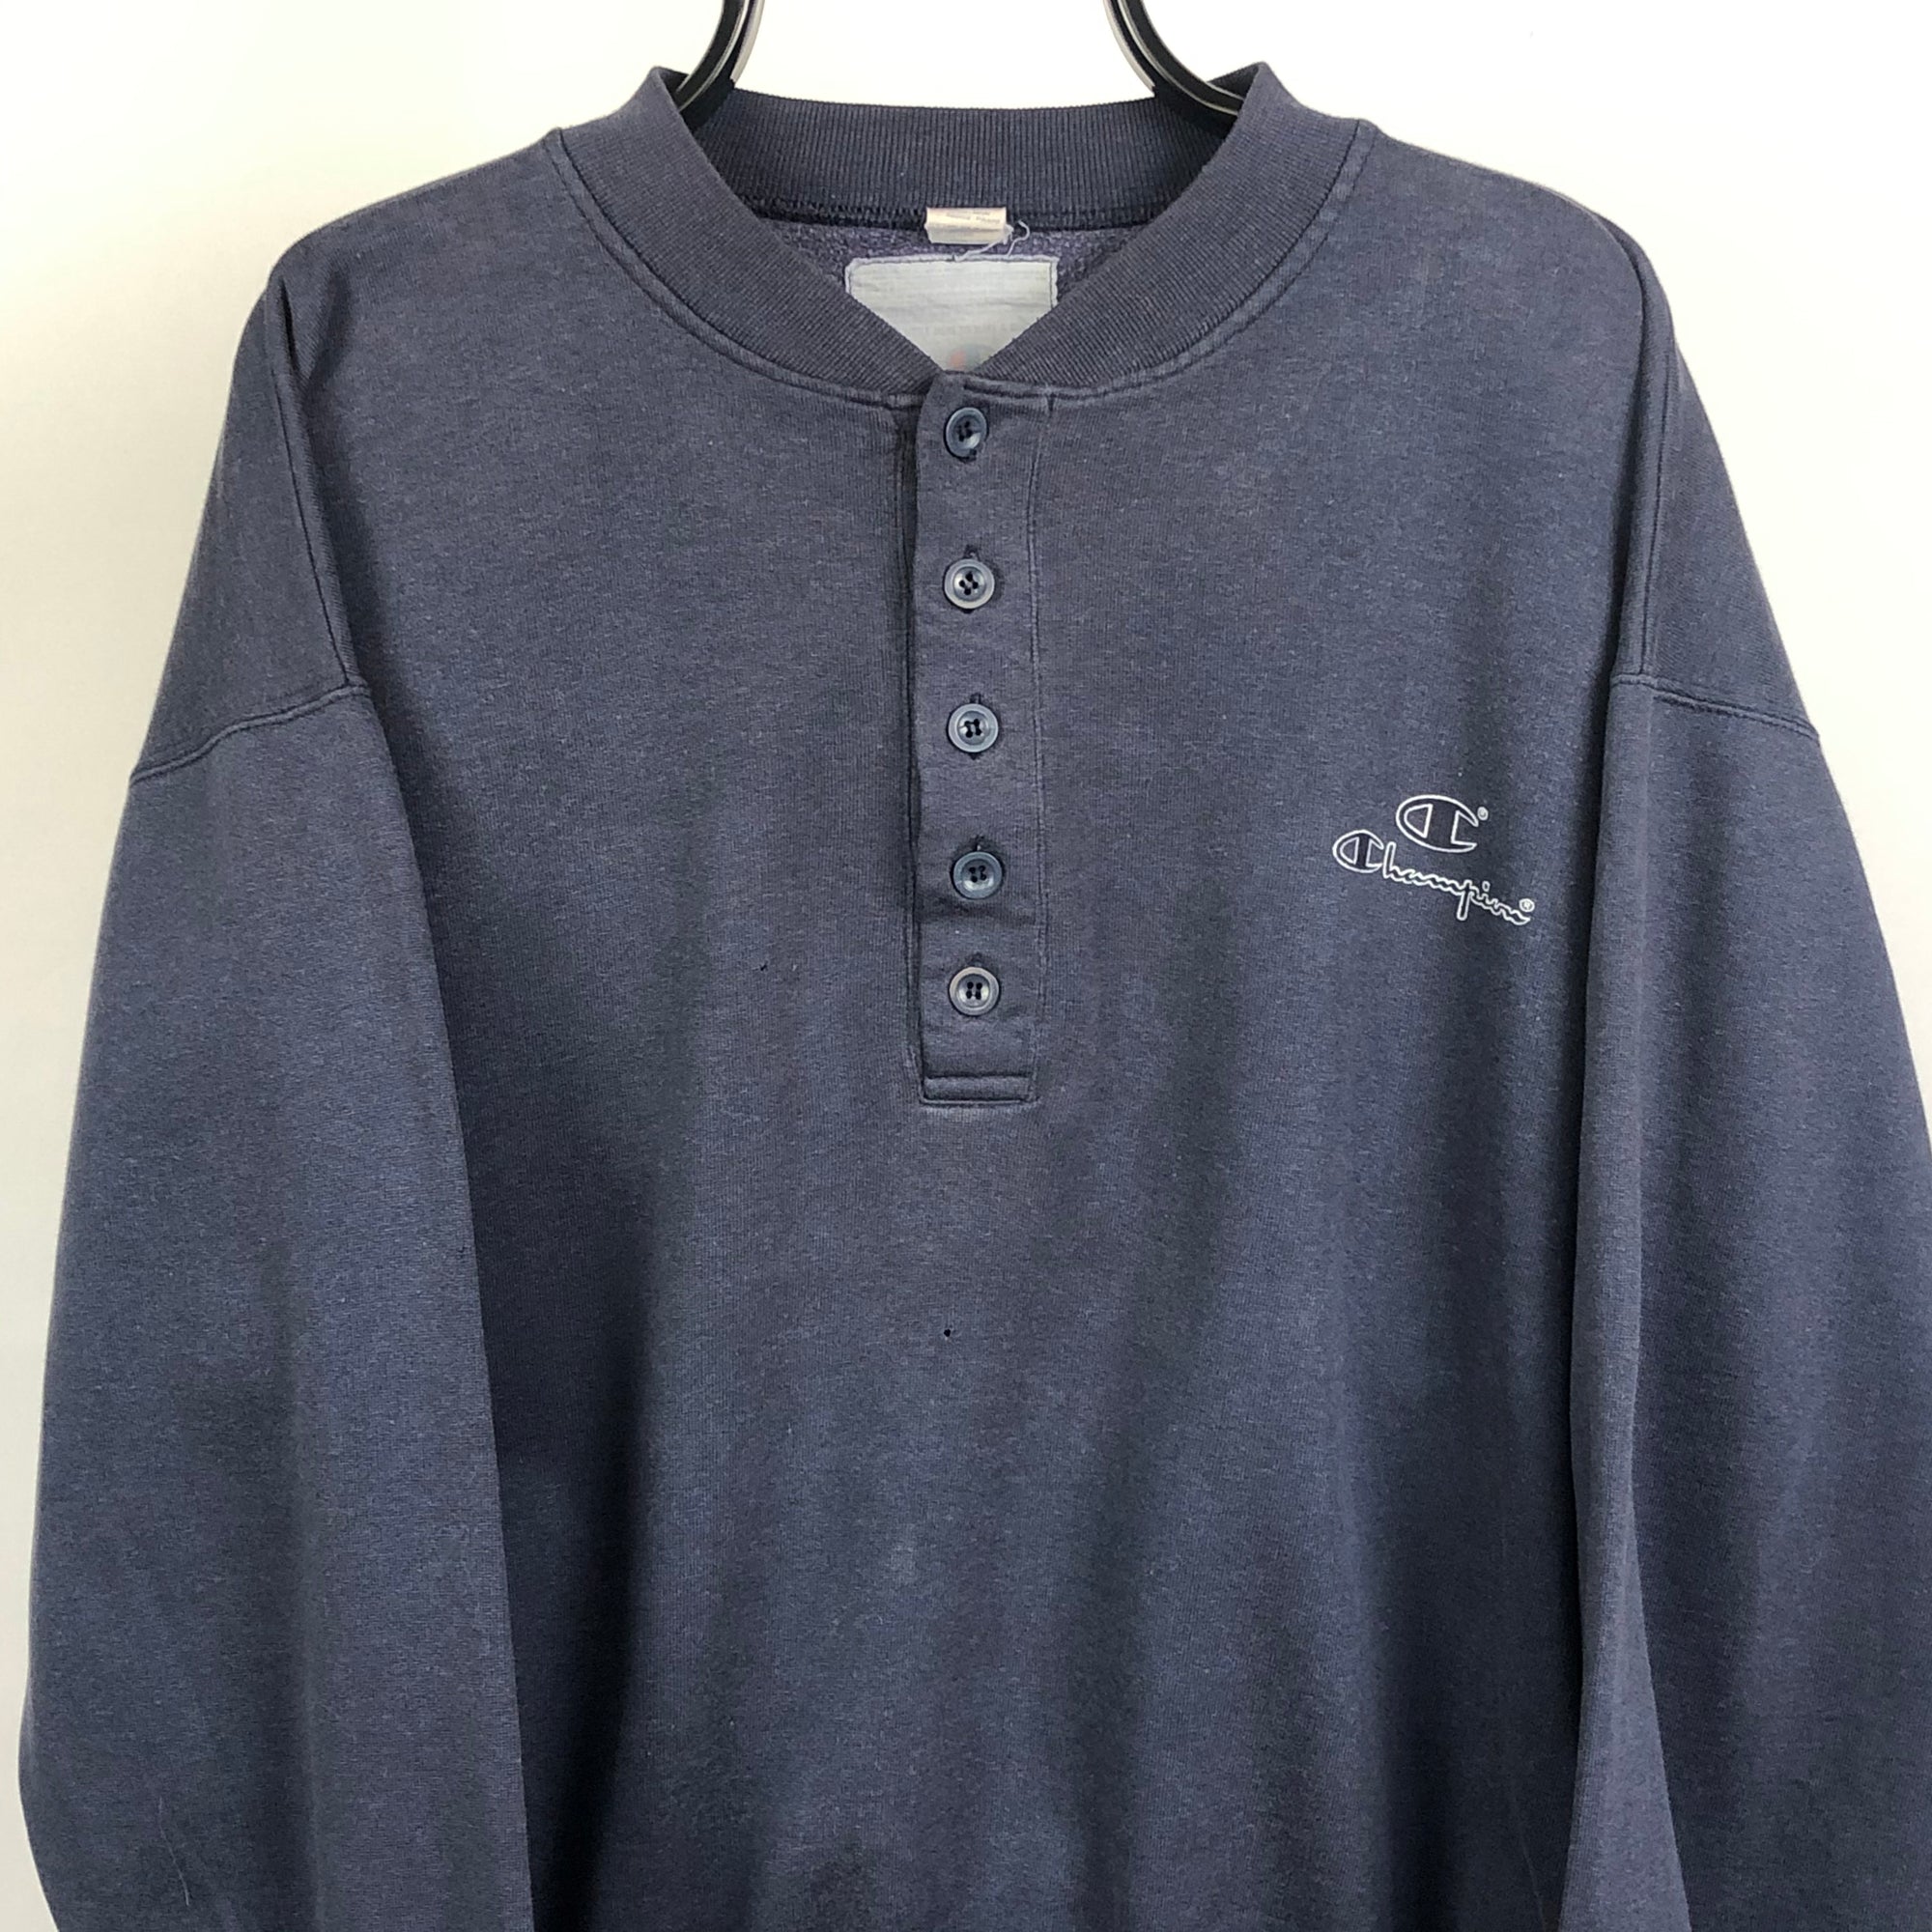 Vintage Champion Button Up Sweatshirt in Navy - Men's Large/Women's XL